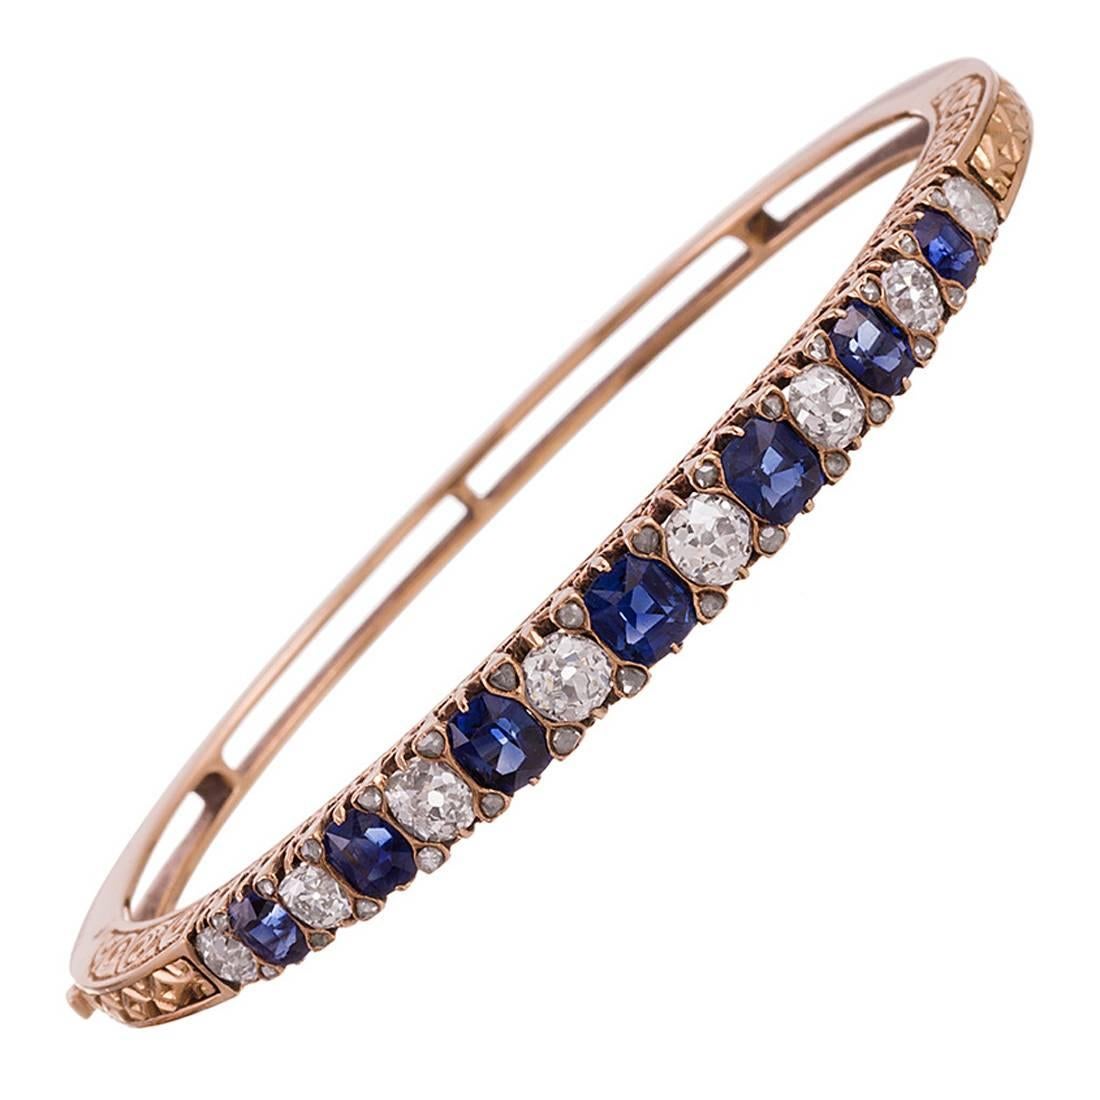 Victorian English Carved Sapphire Diamond Gold Bangle Bracelet